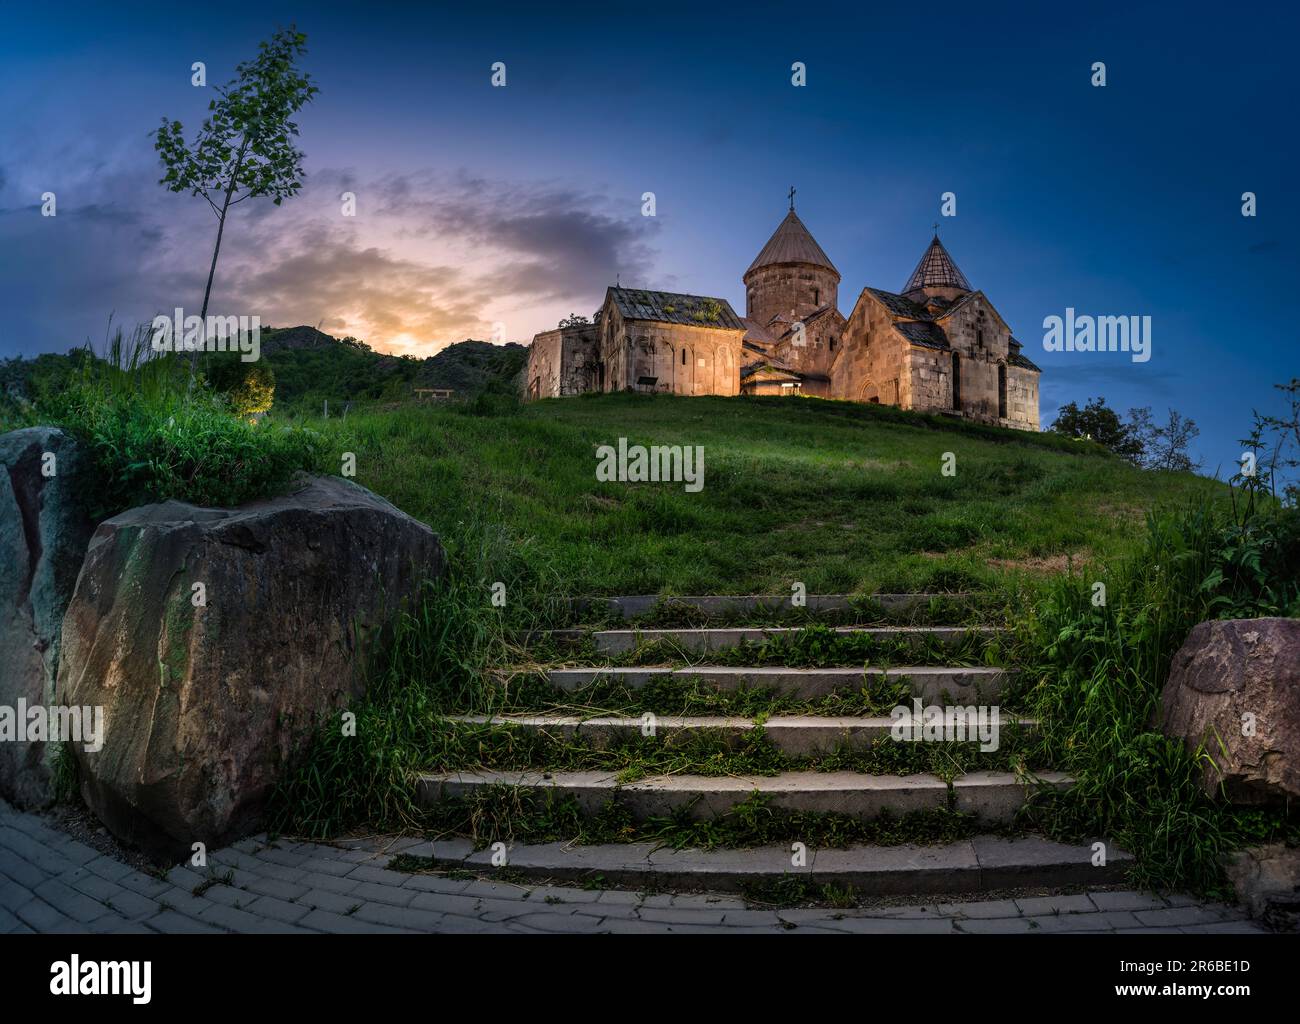 Goshavank Monastery in Gosh Village, Tavush Province, Armenia Stock Photo